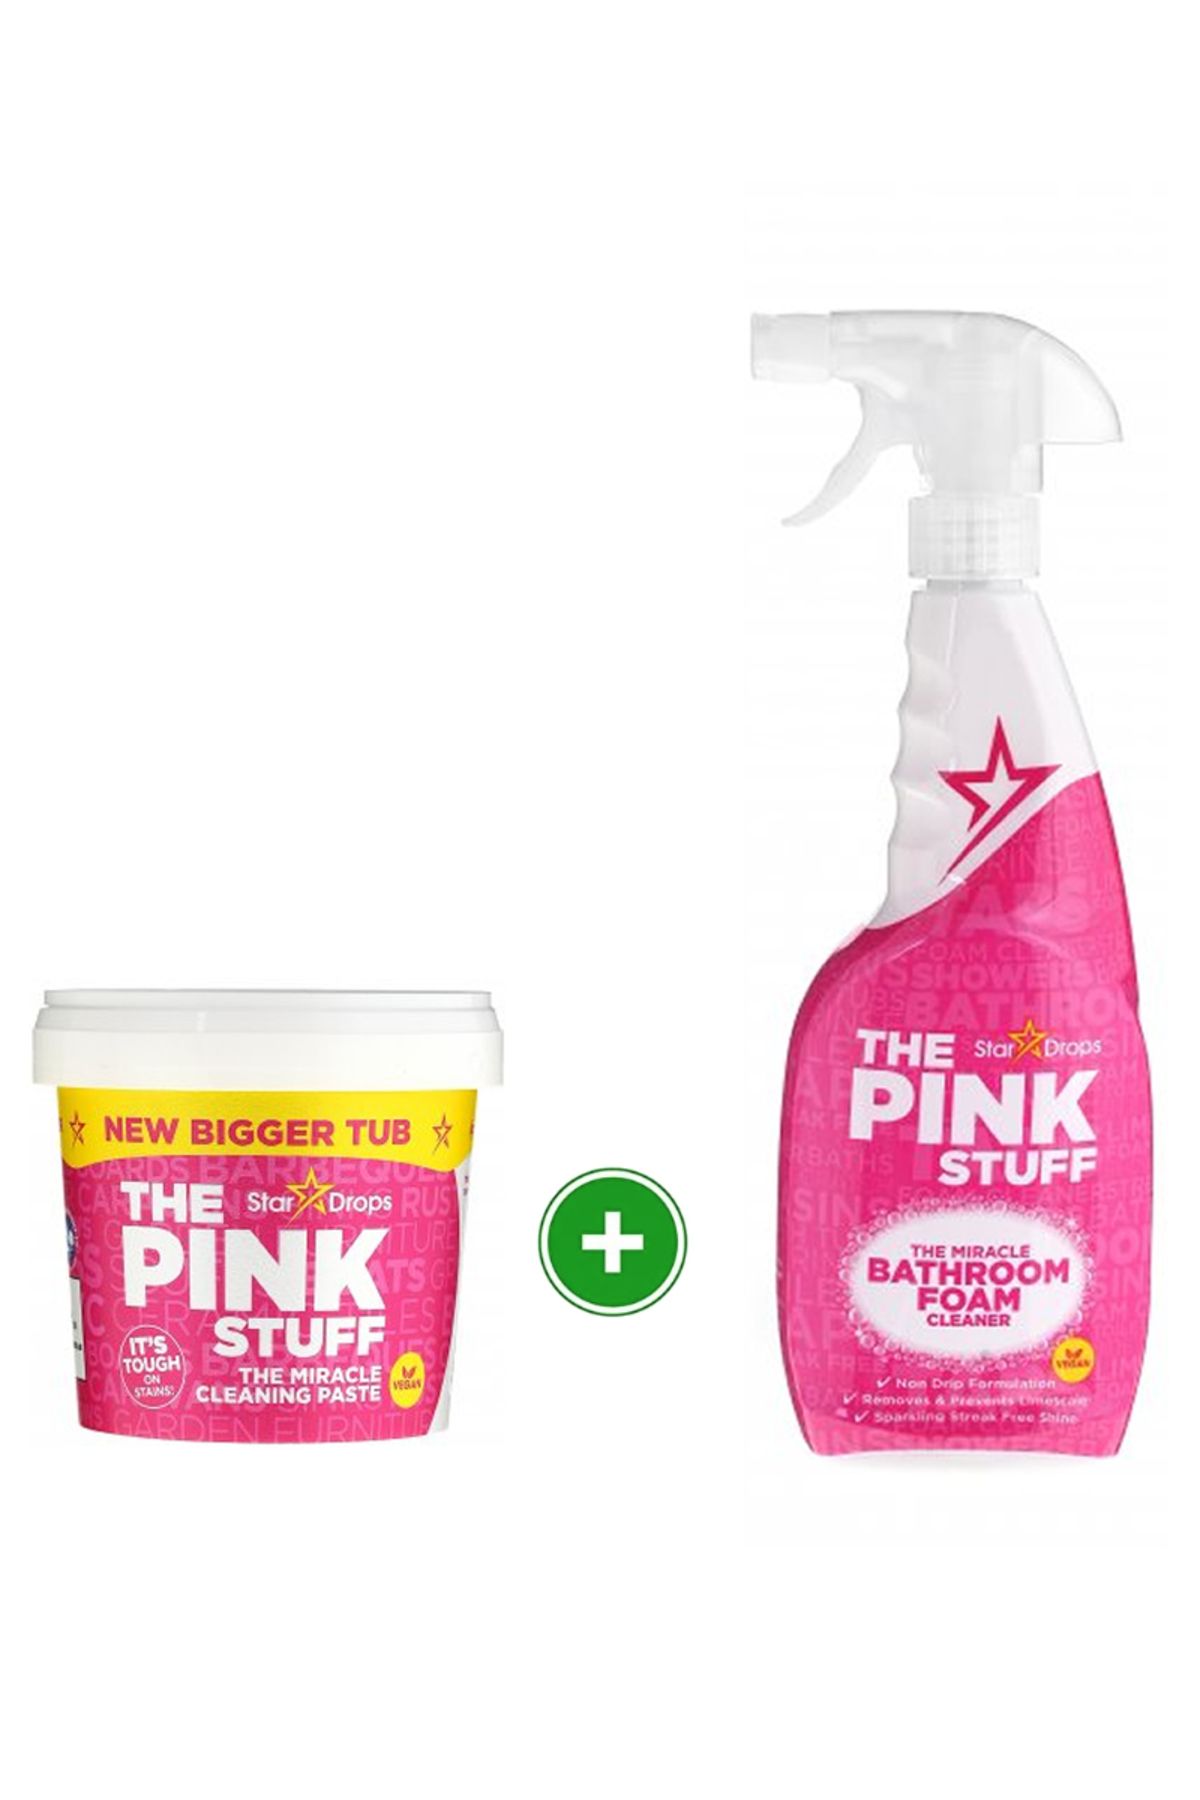 ThePinkStuff The Pink Stuff Temizlik Macunu 850 gr The Pink Stuff Banyo Köpük Temizleyici 750 ml